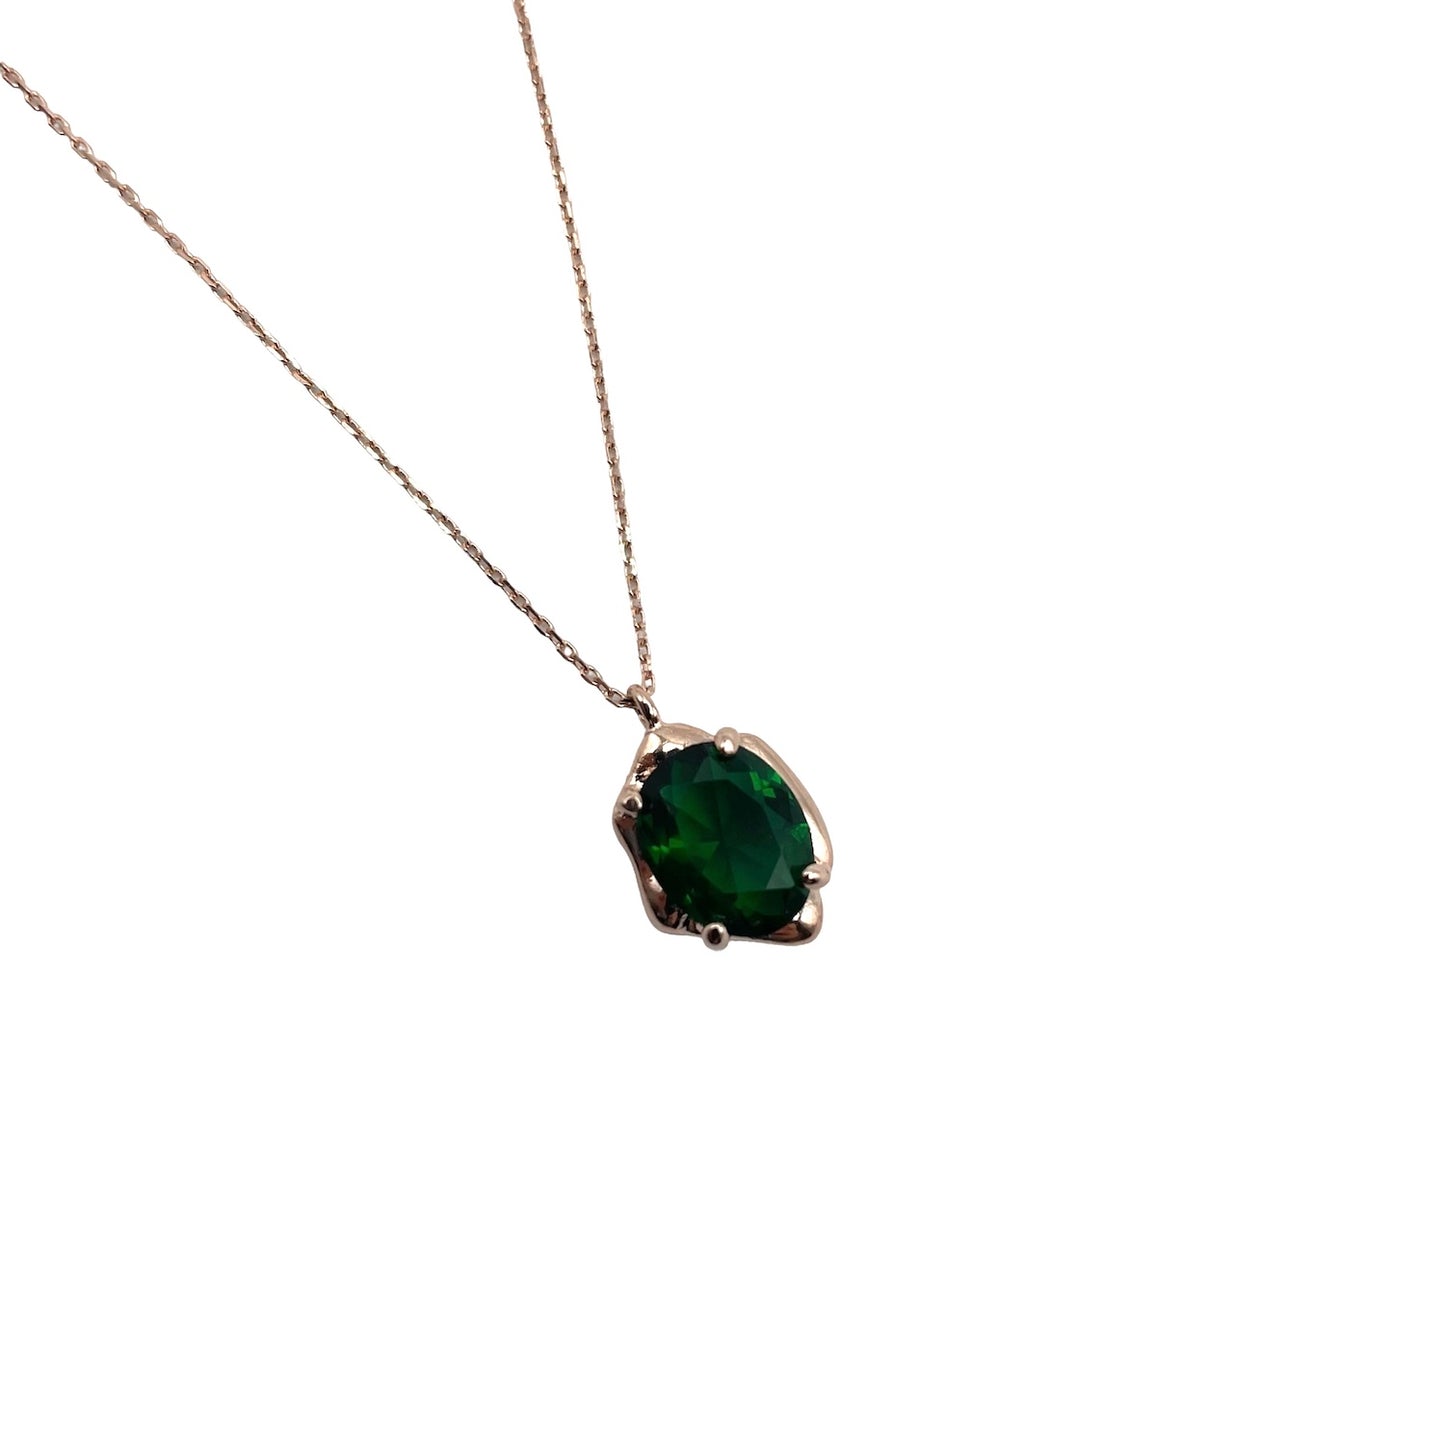 Vintage emerald style necklace